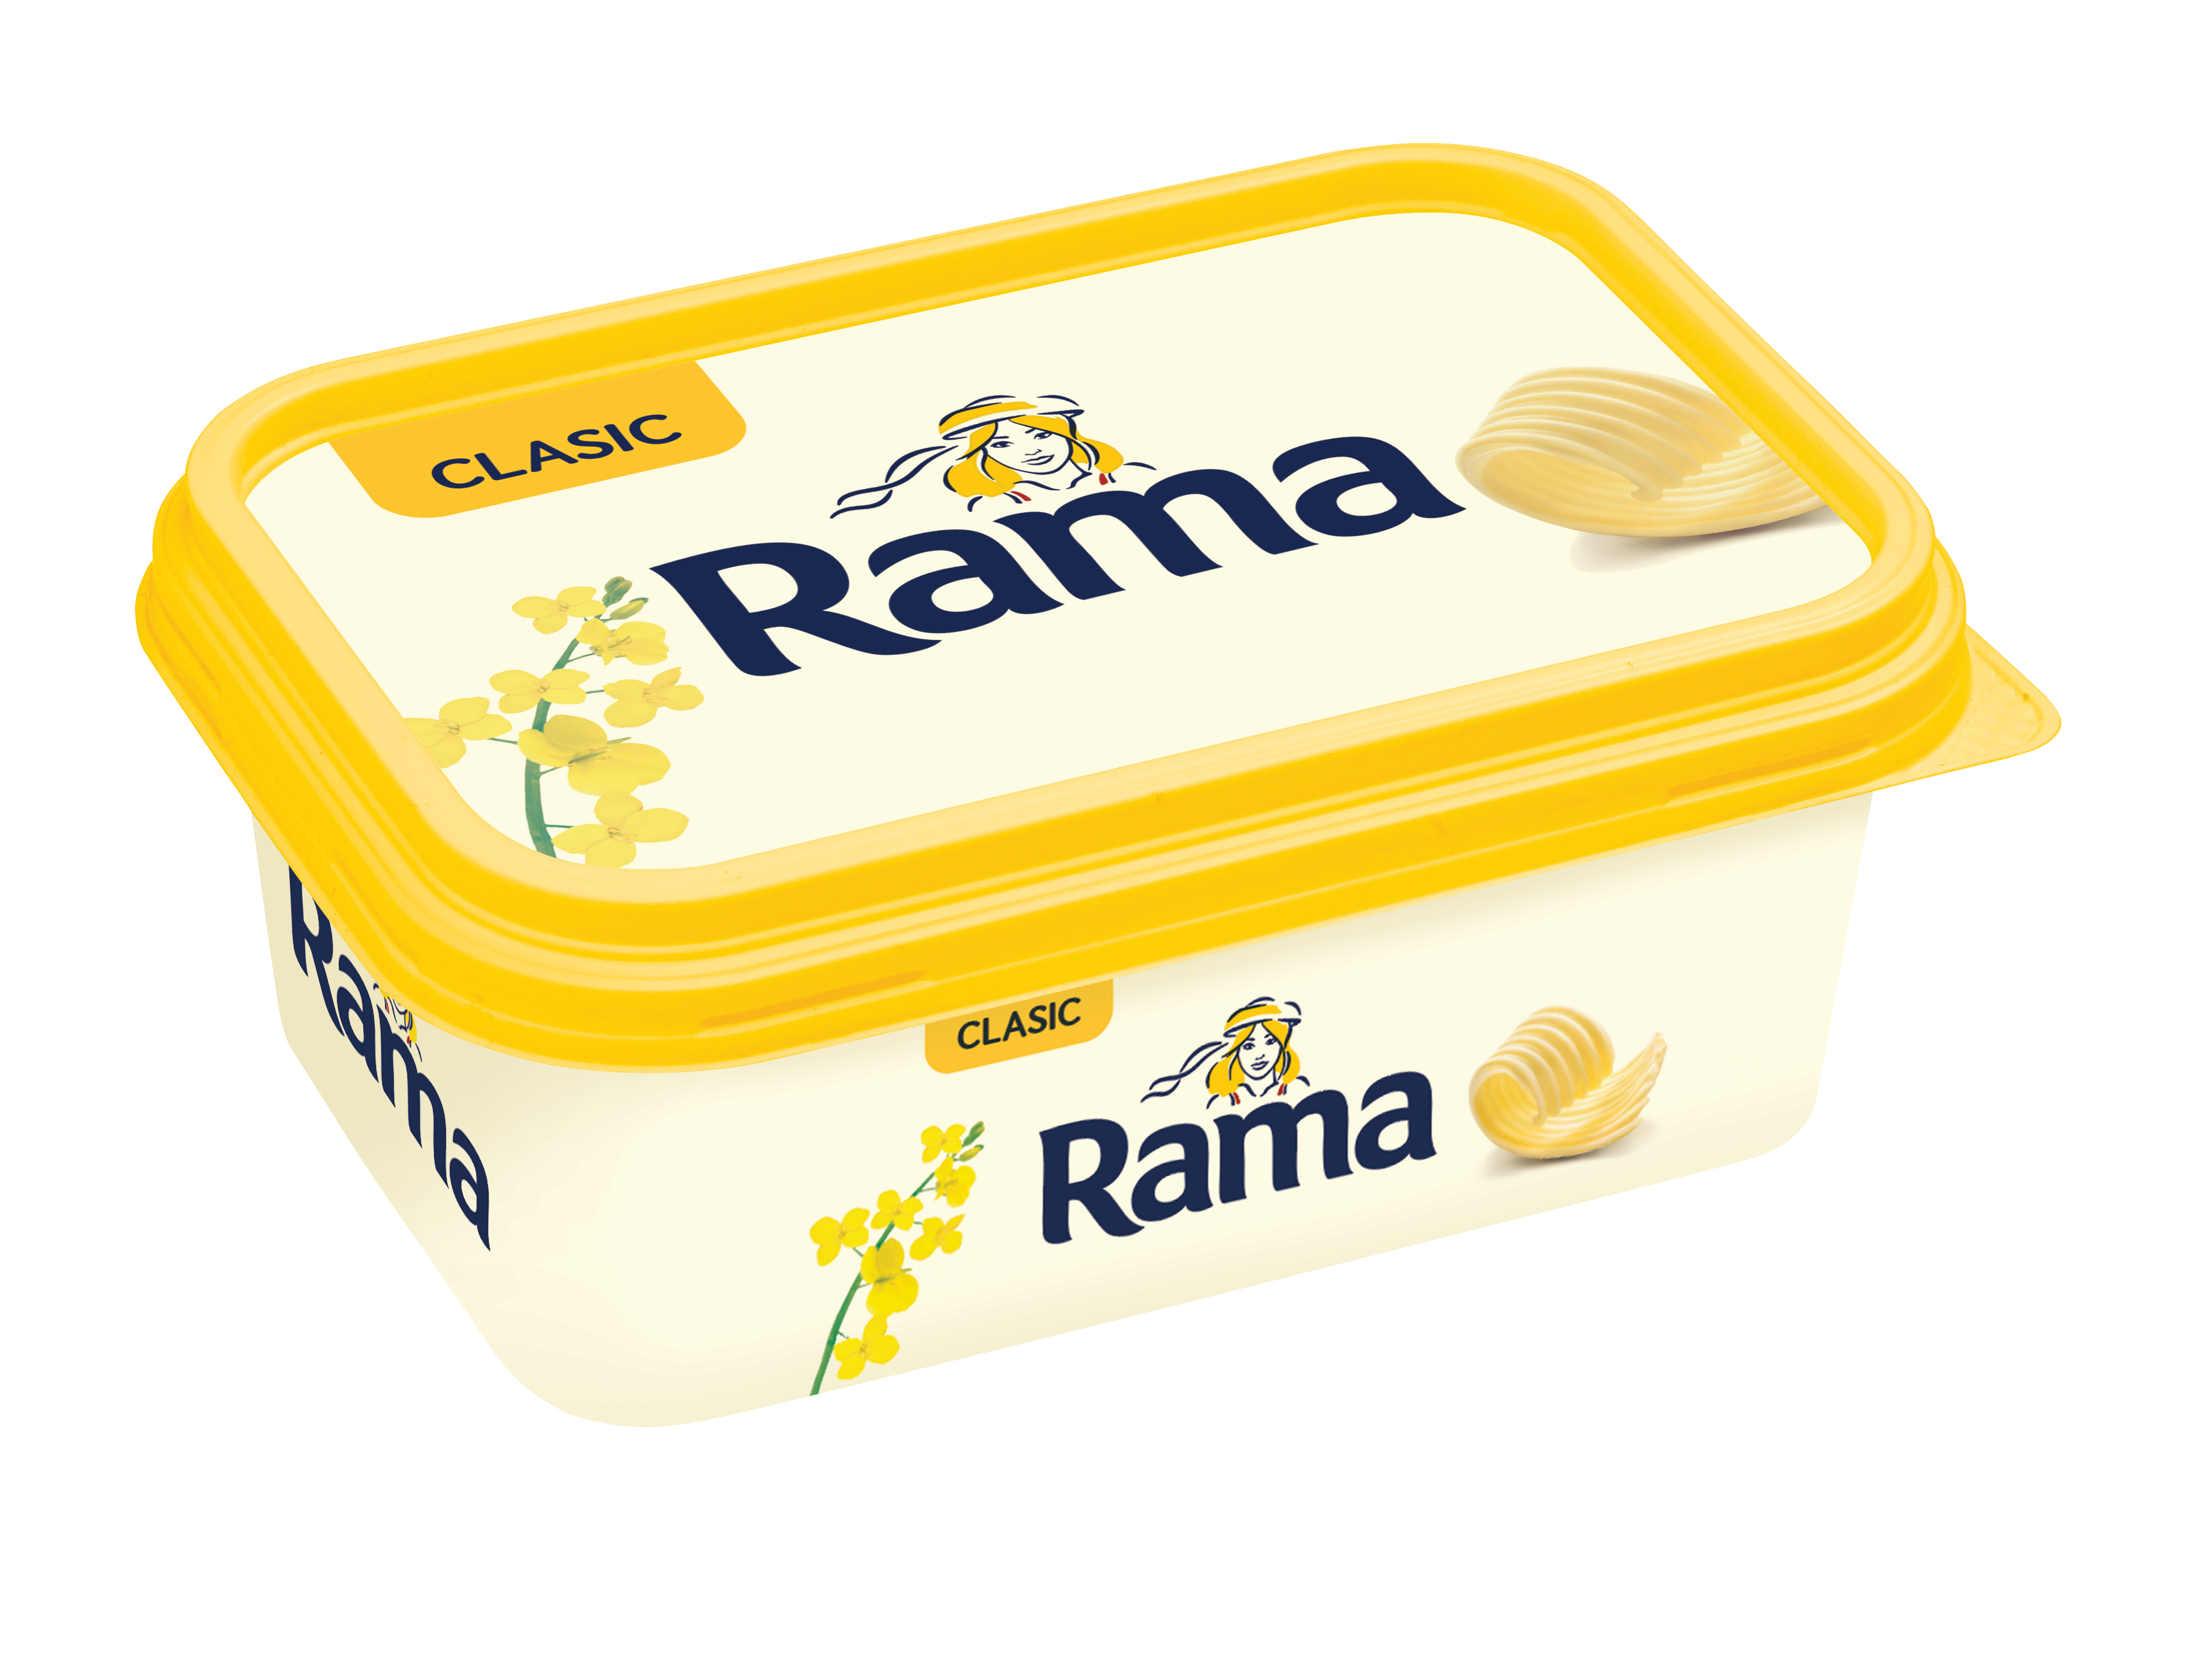 RAMA Clasic packshot 